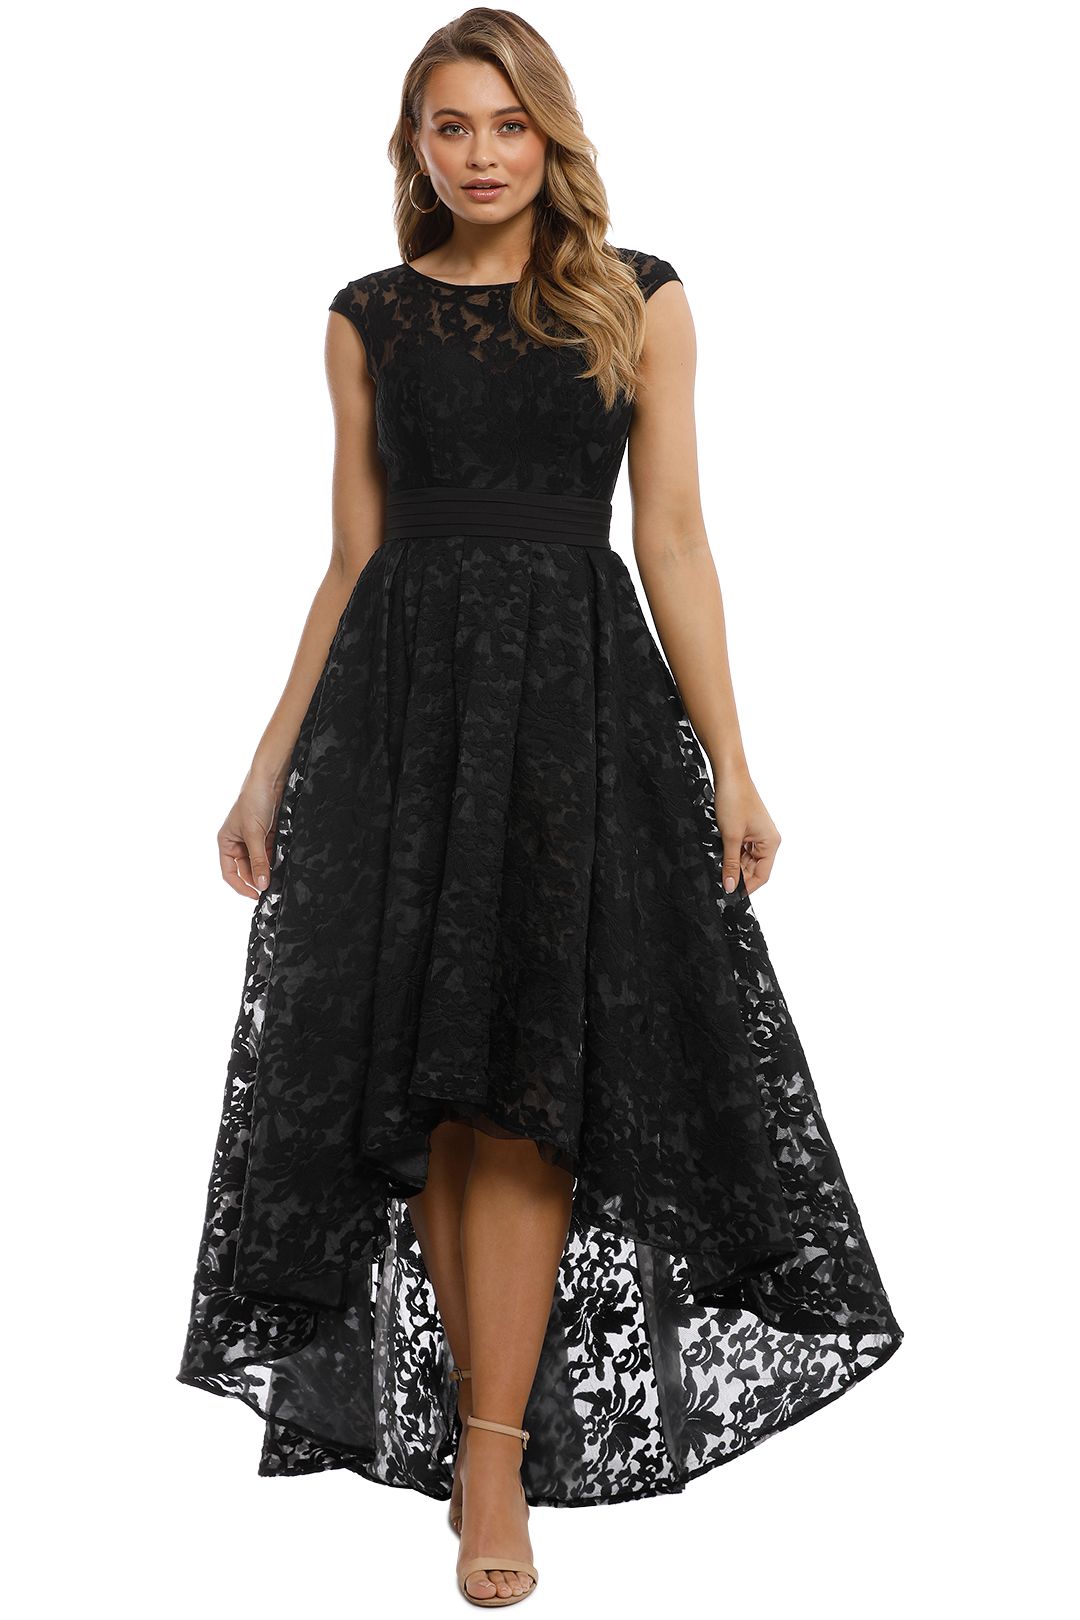 L'Amour - Jordana Dress - Black - Front